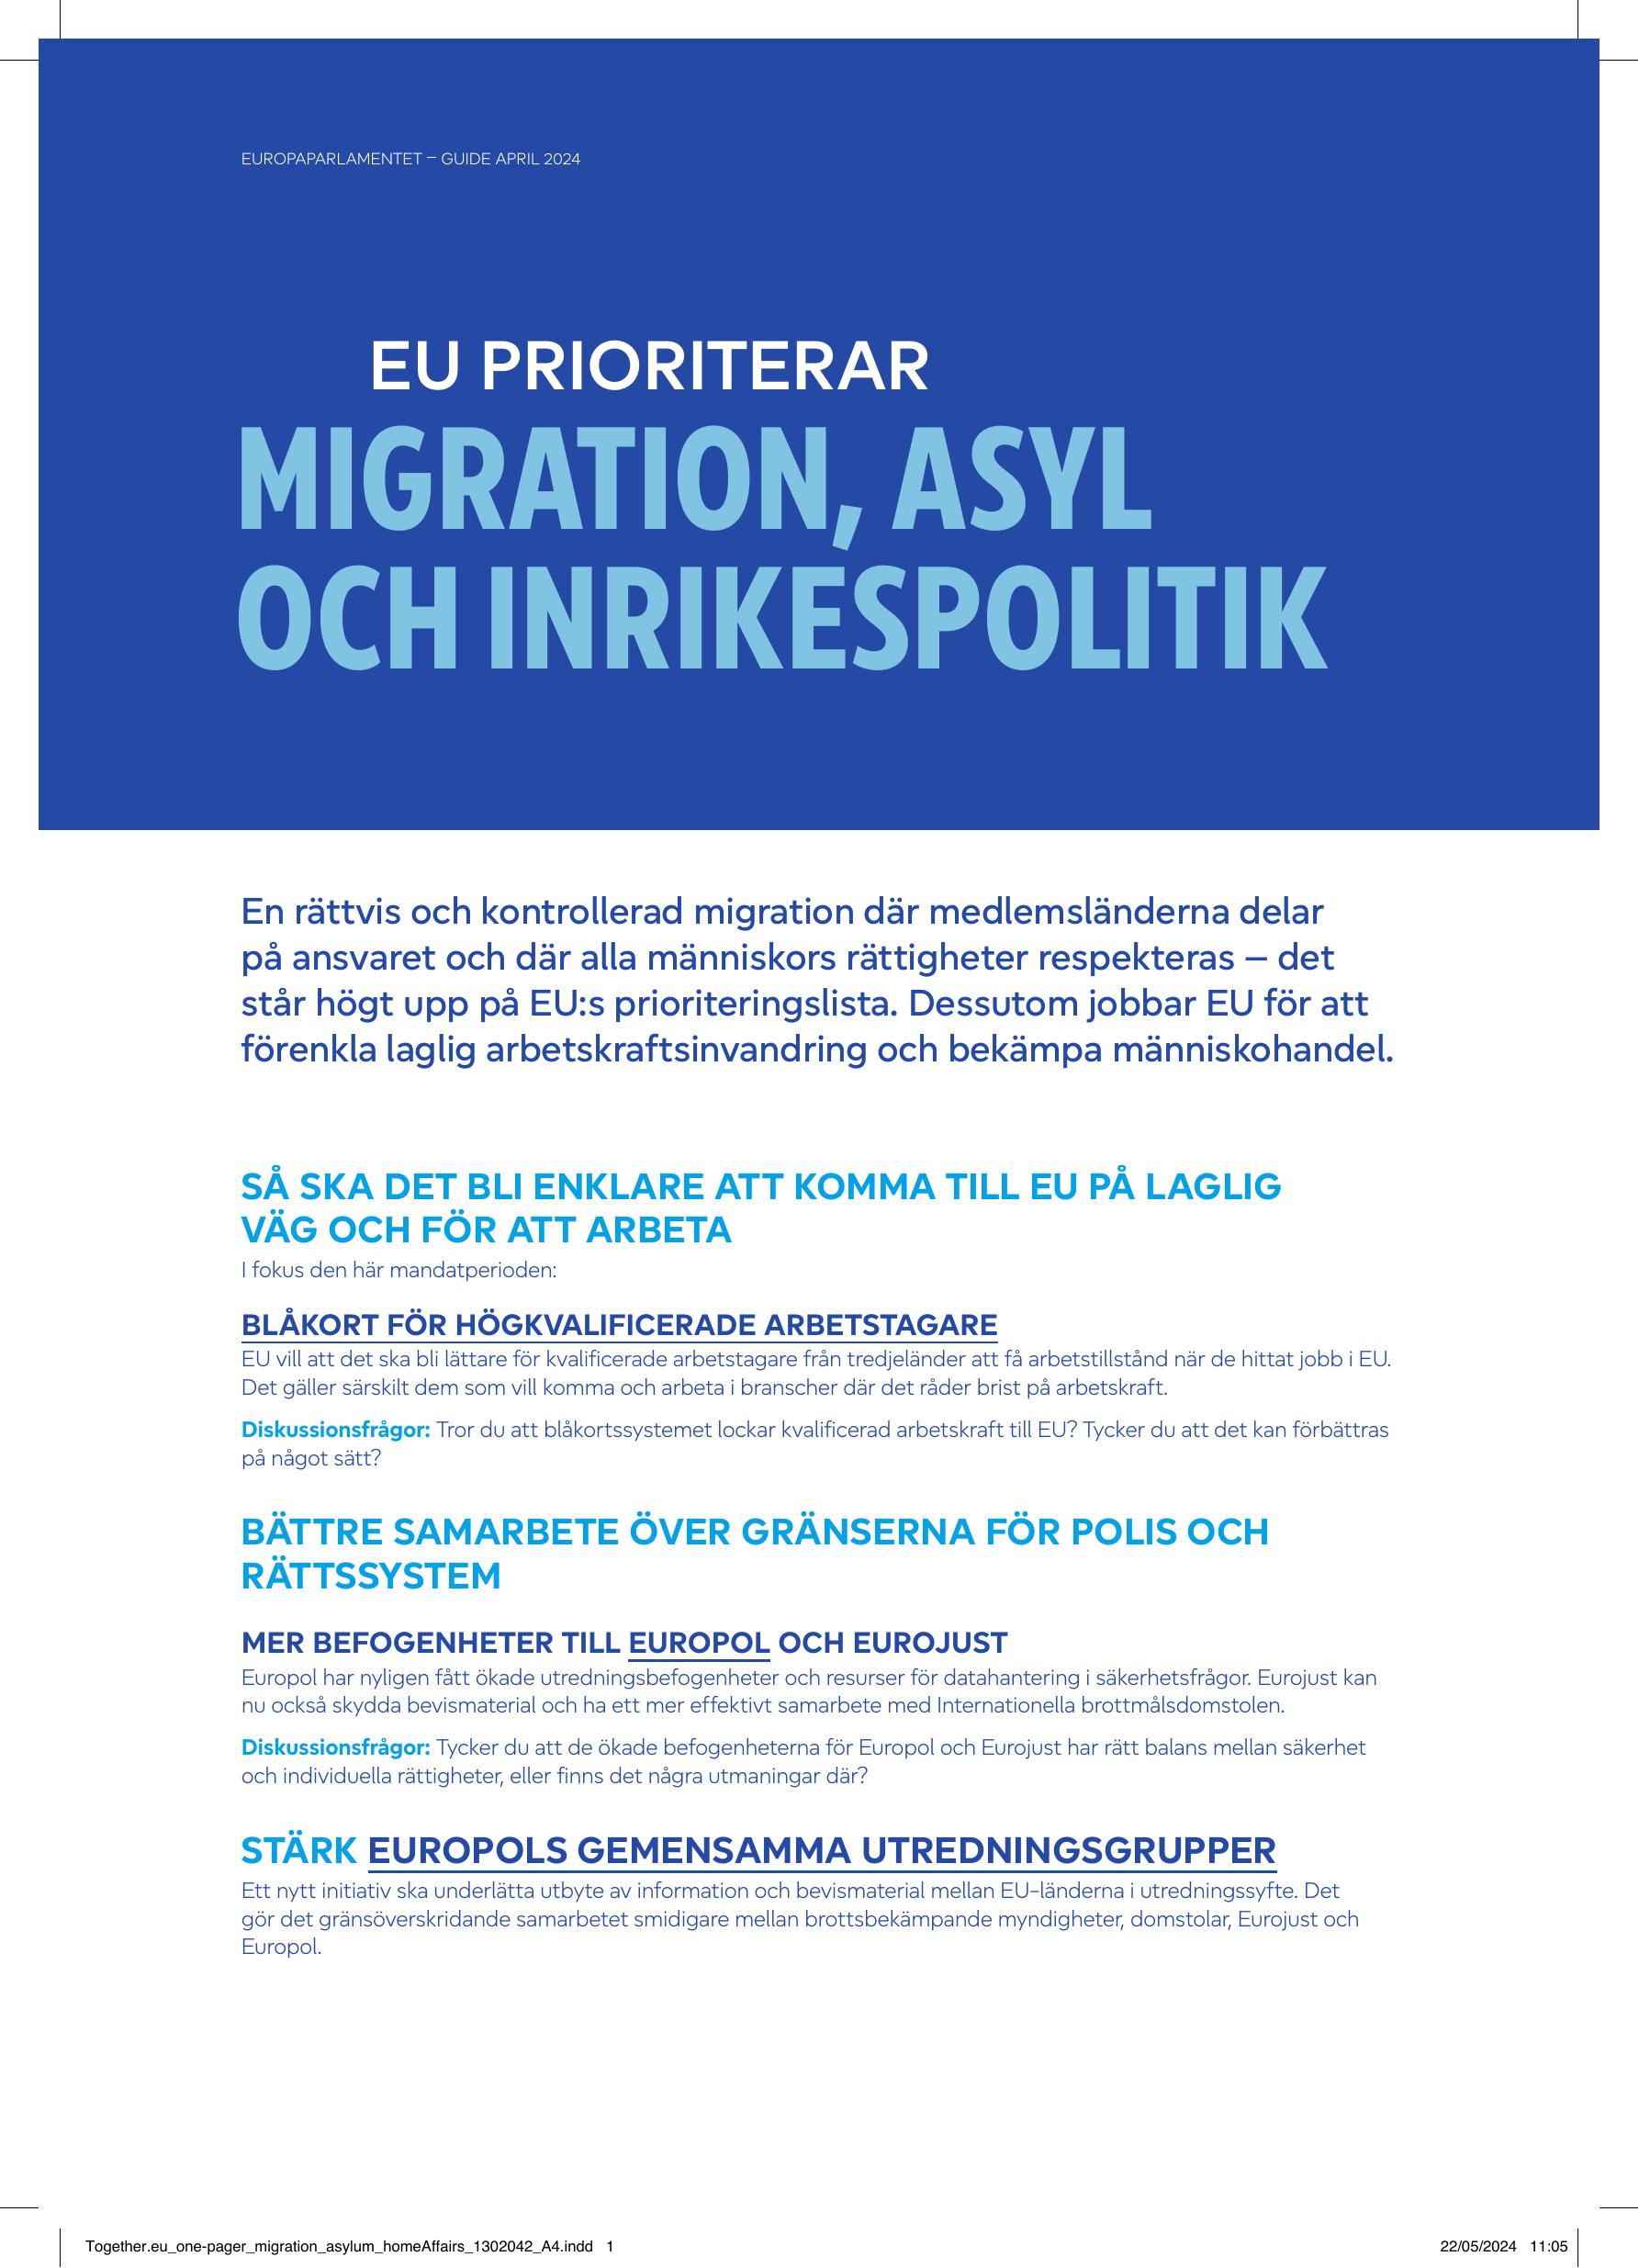 Together.eu_one-pager_migration_asylum_homeAffairs_print.pdf